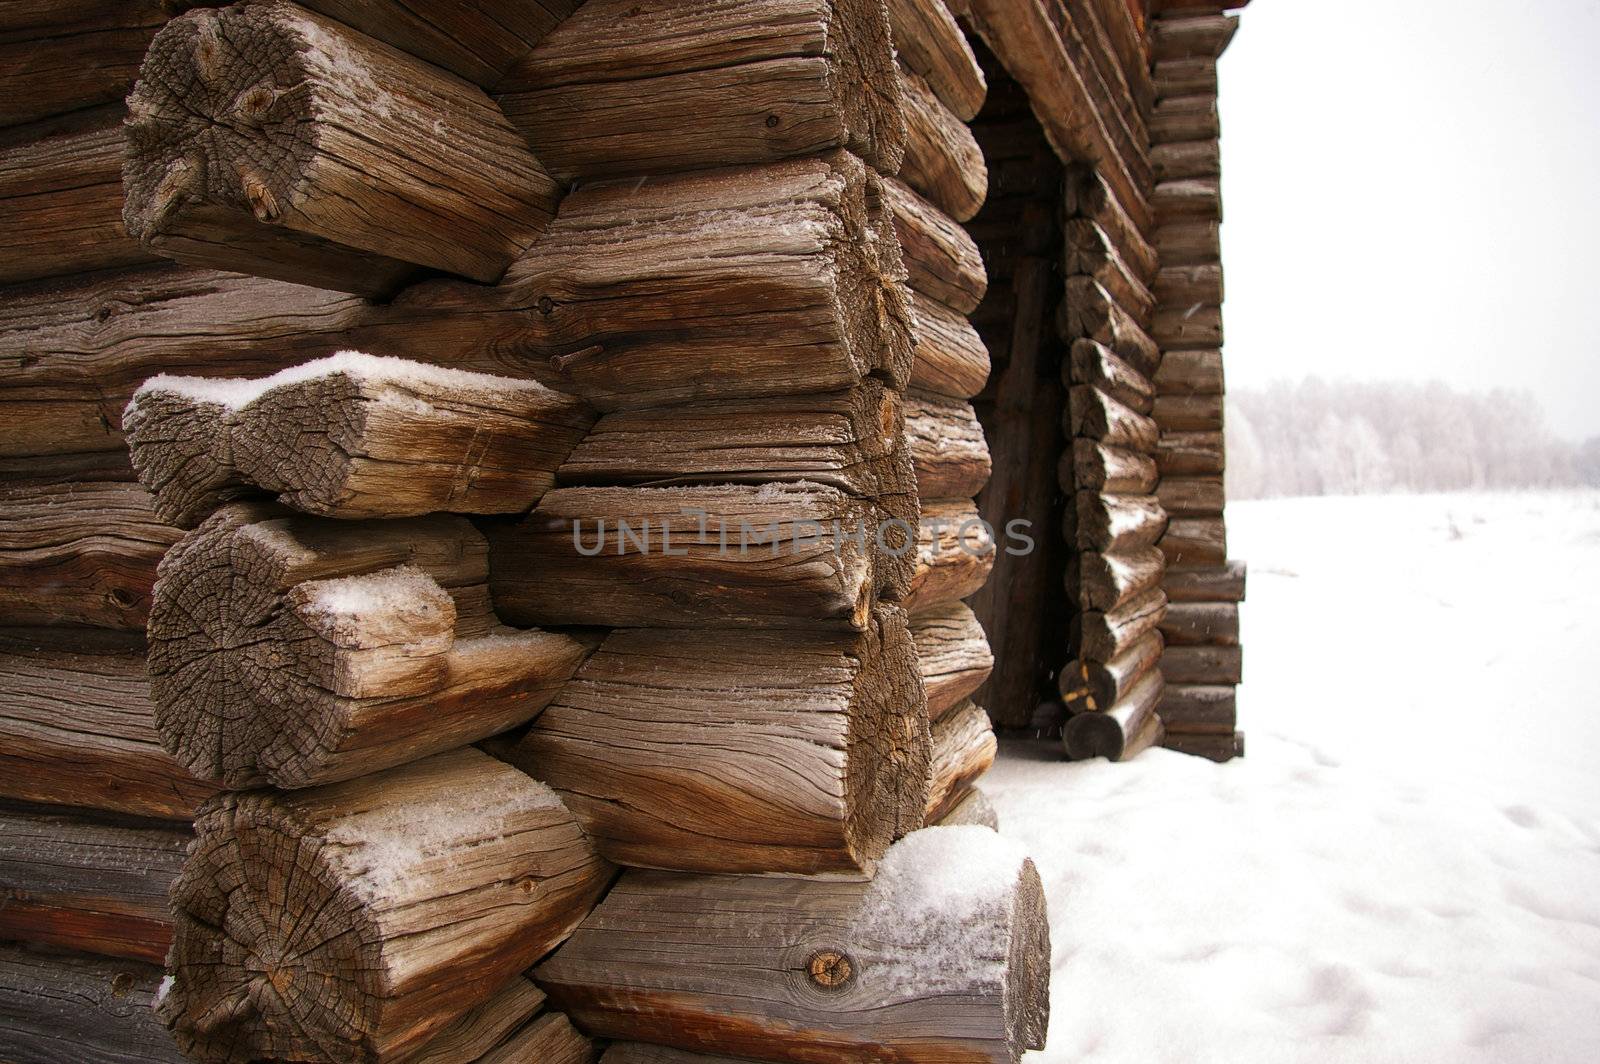 Corner of Timbered log hut. Winter and snow